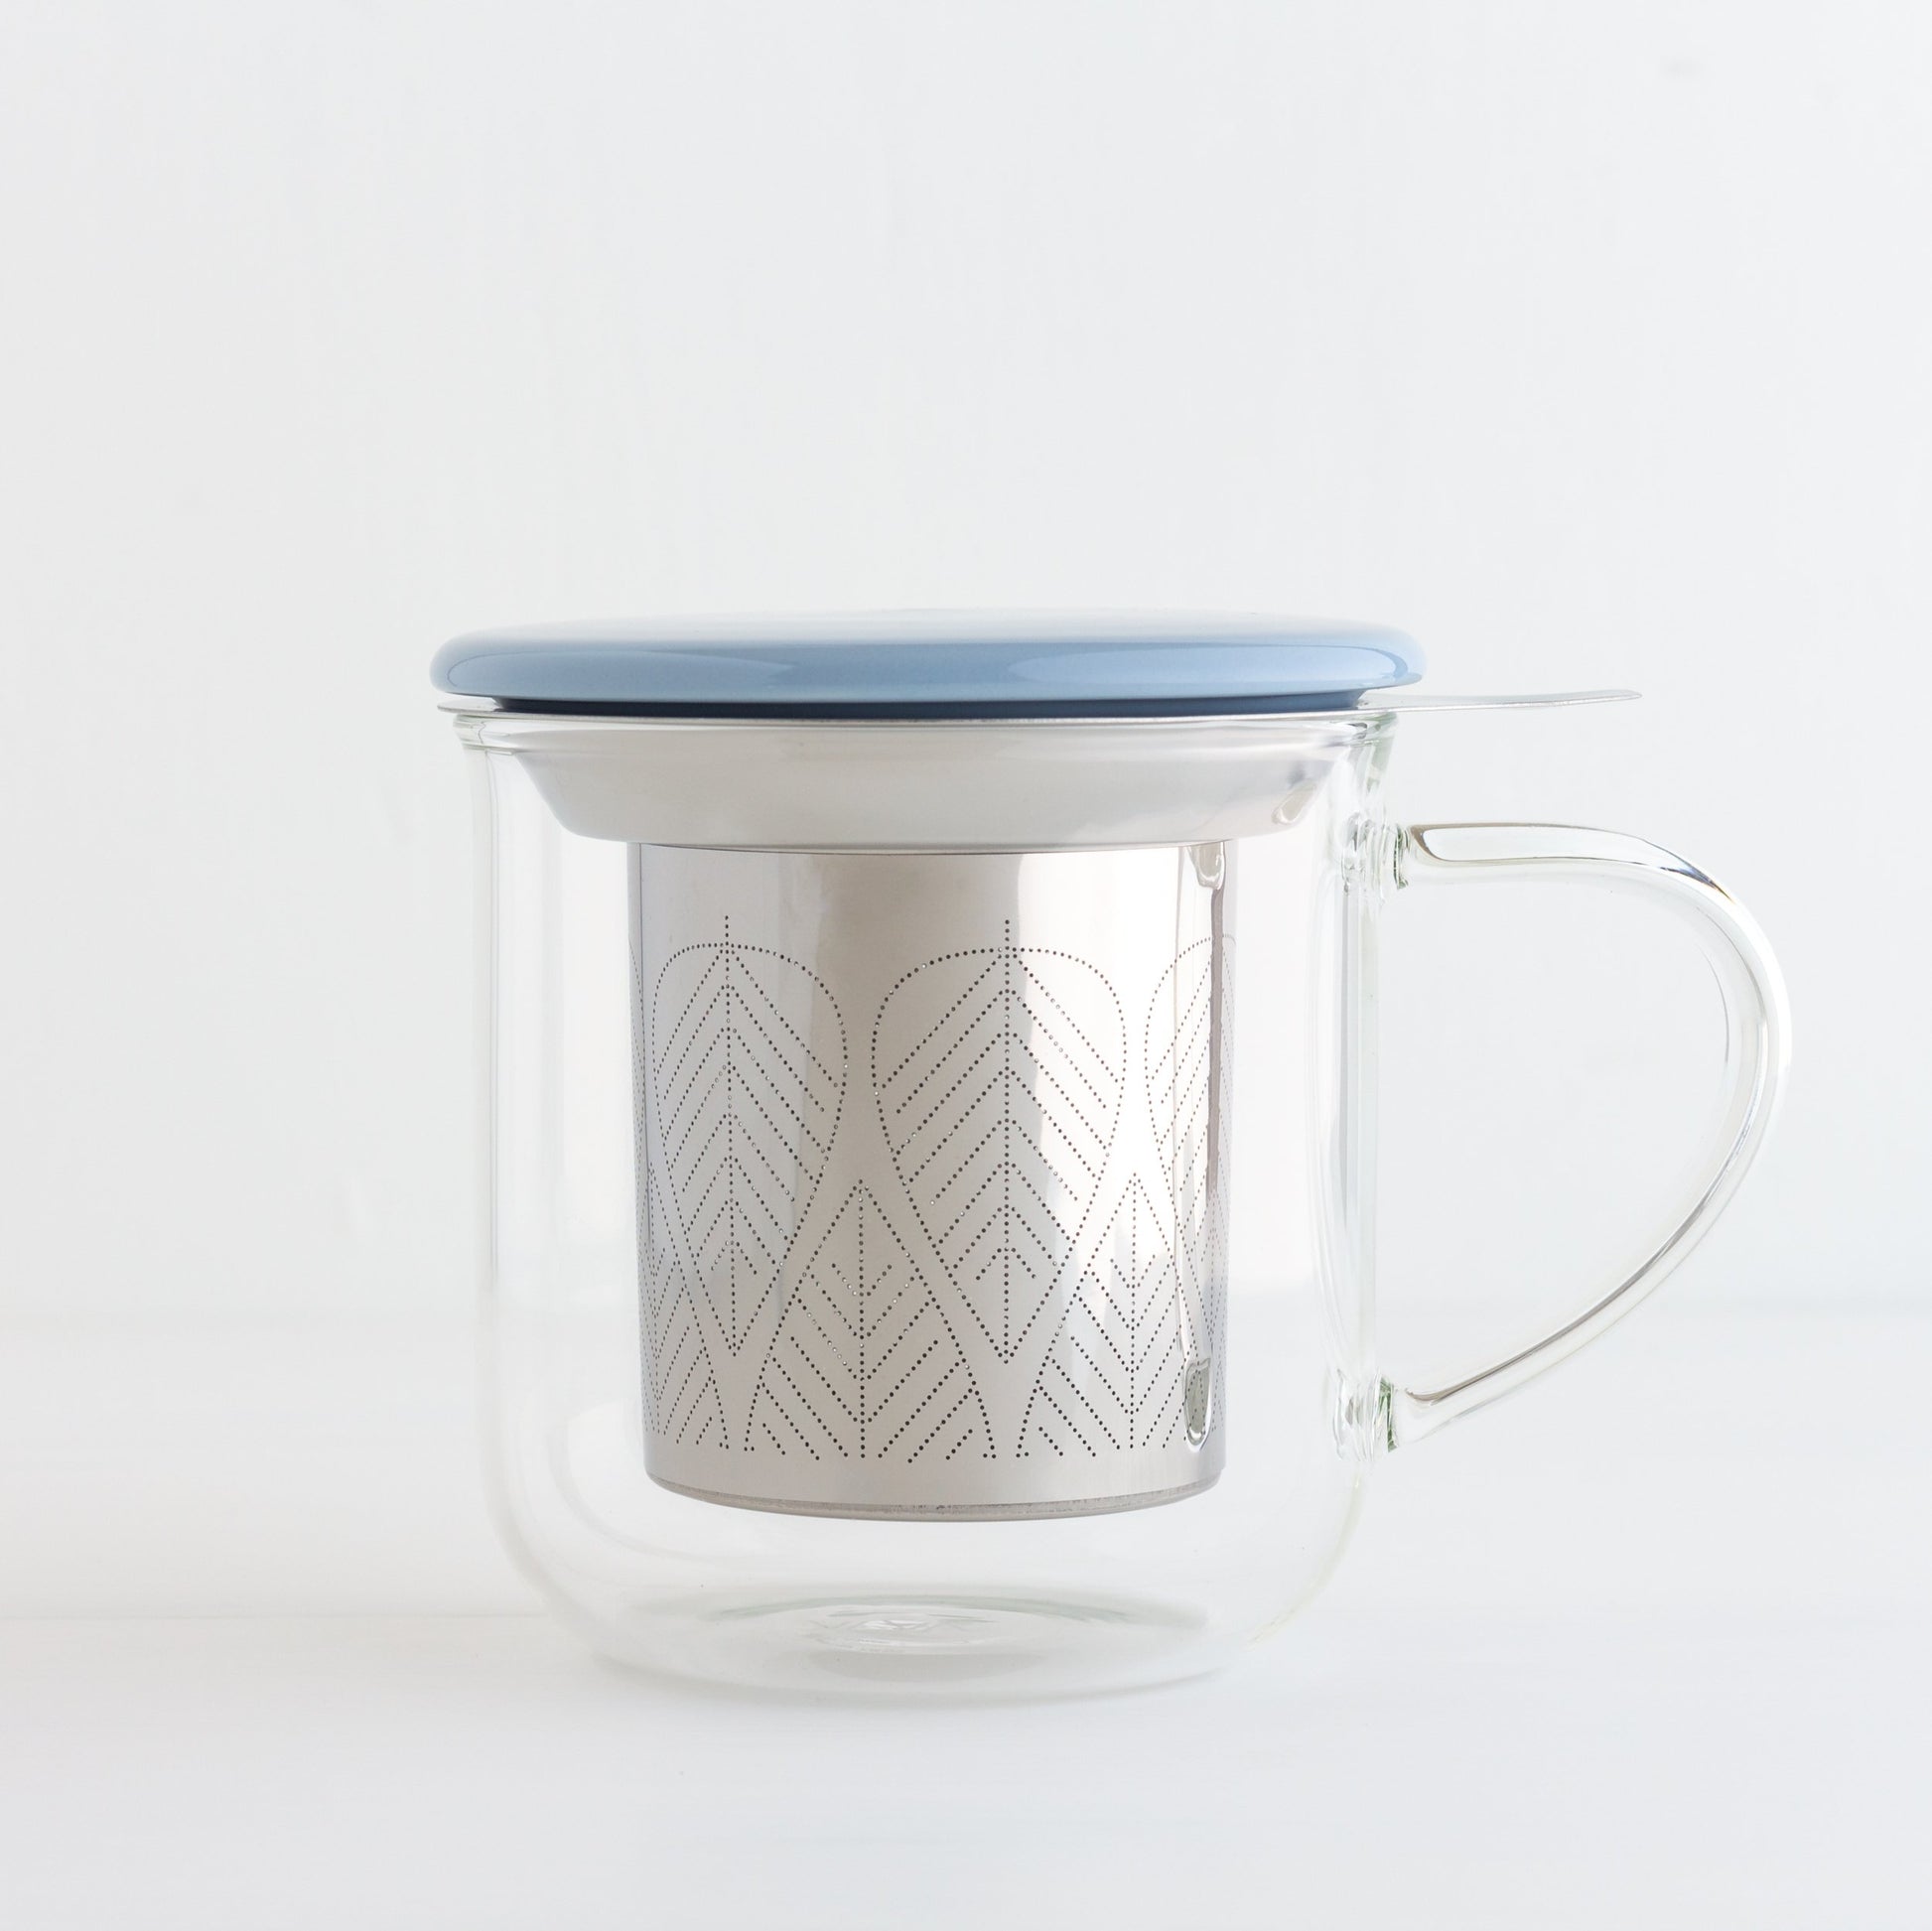 The Best Tea Infusers for Loose Leaf Tea – ArtfulTea